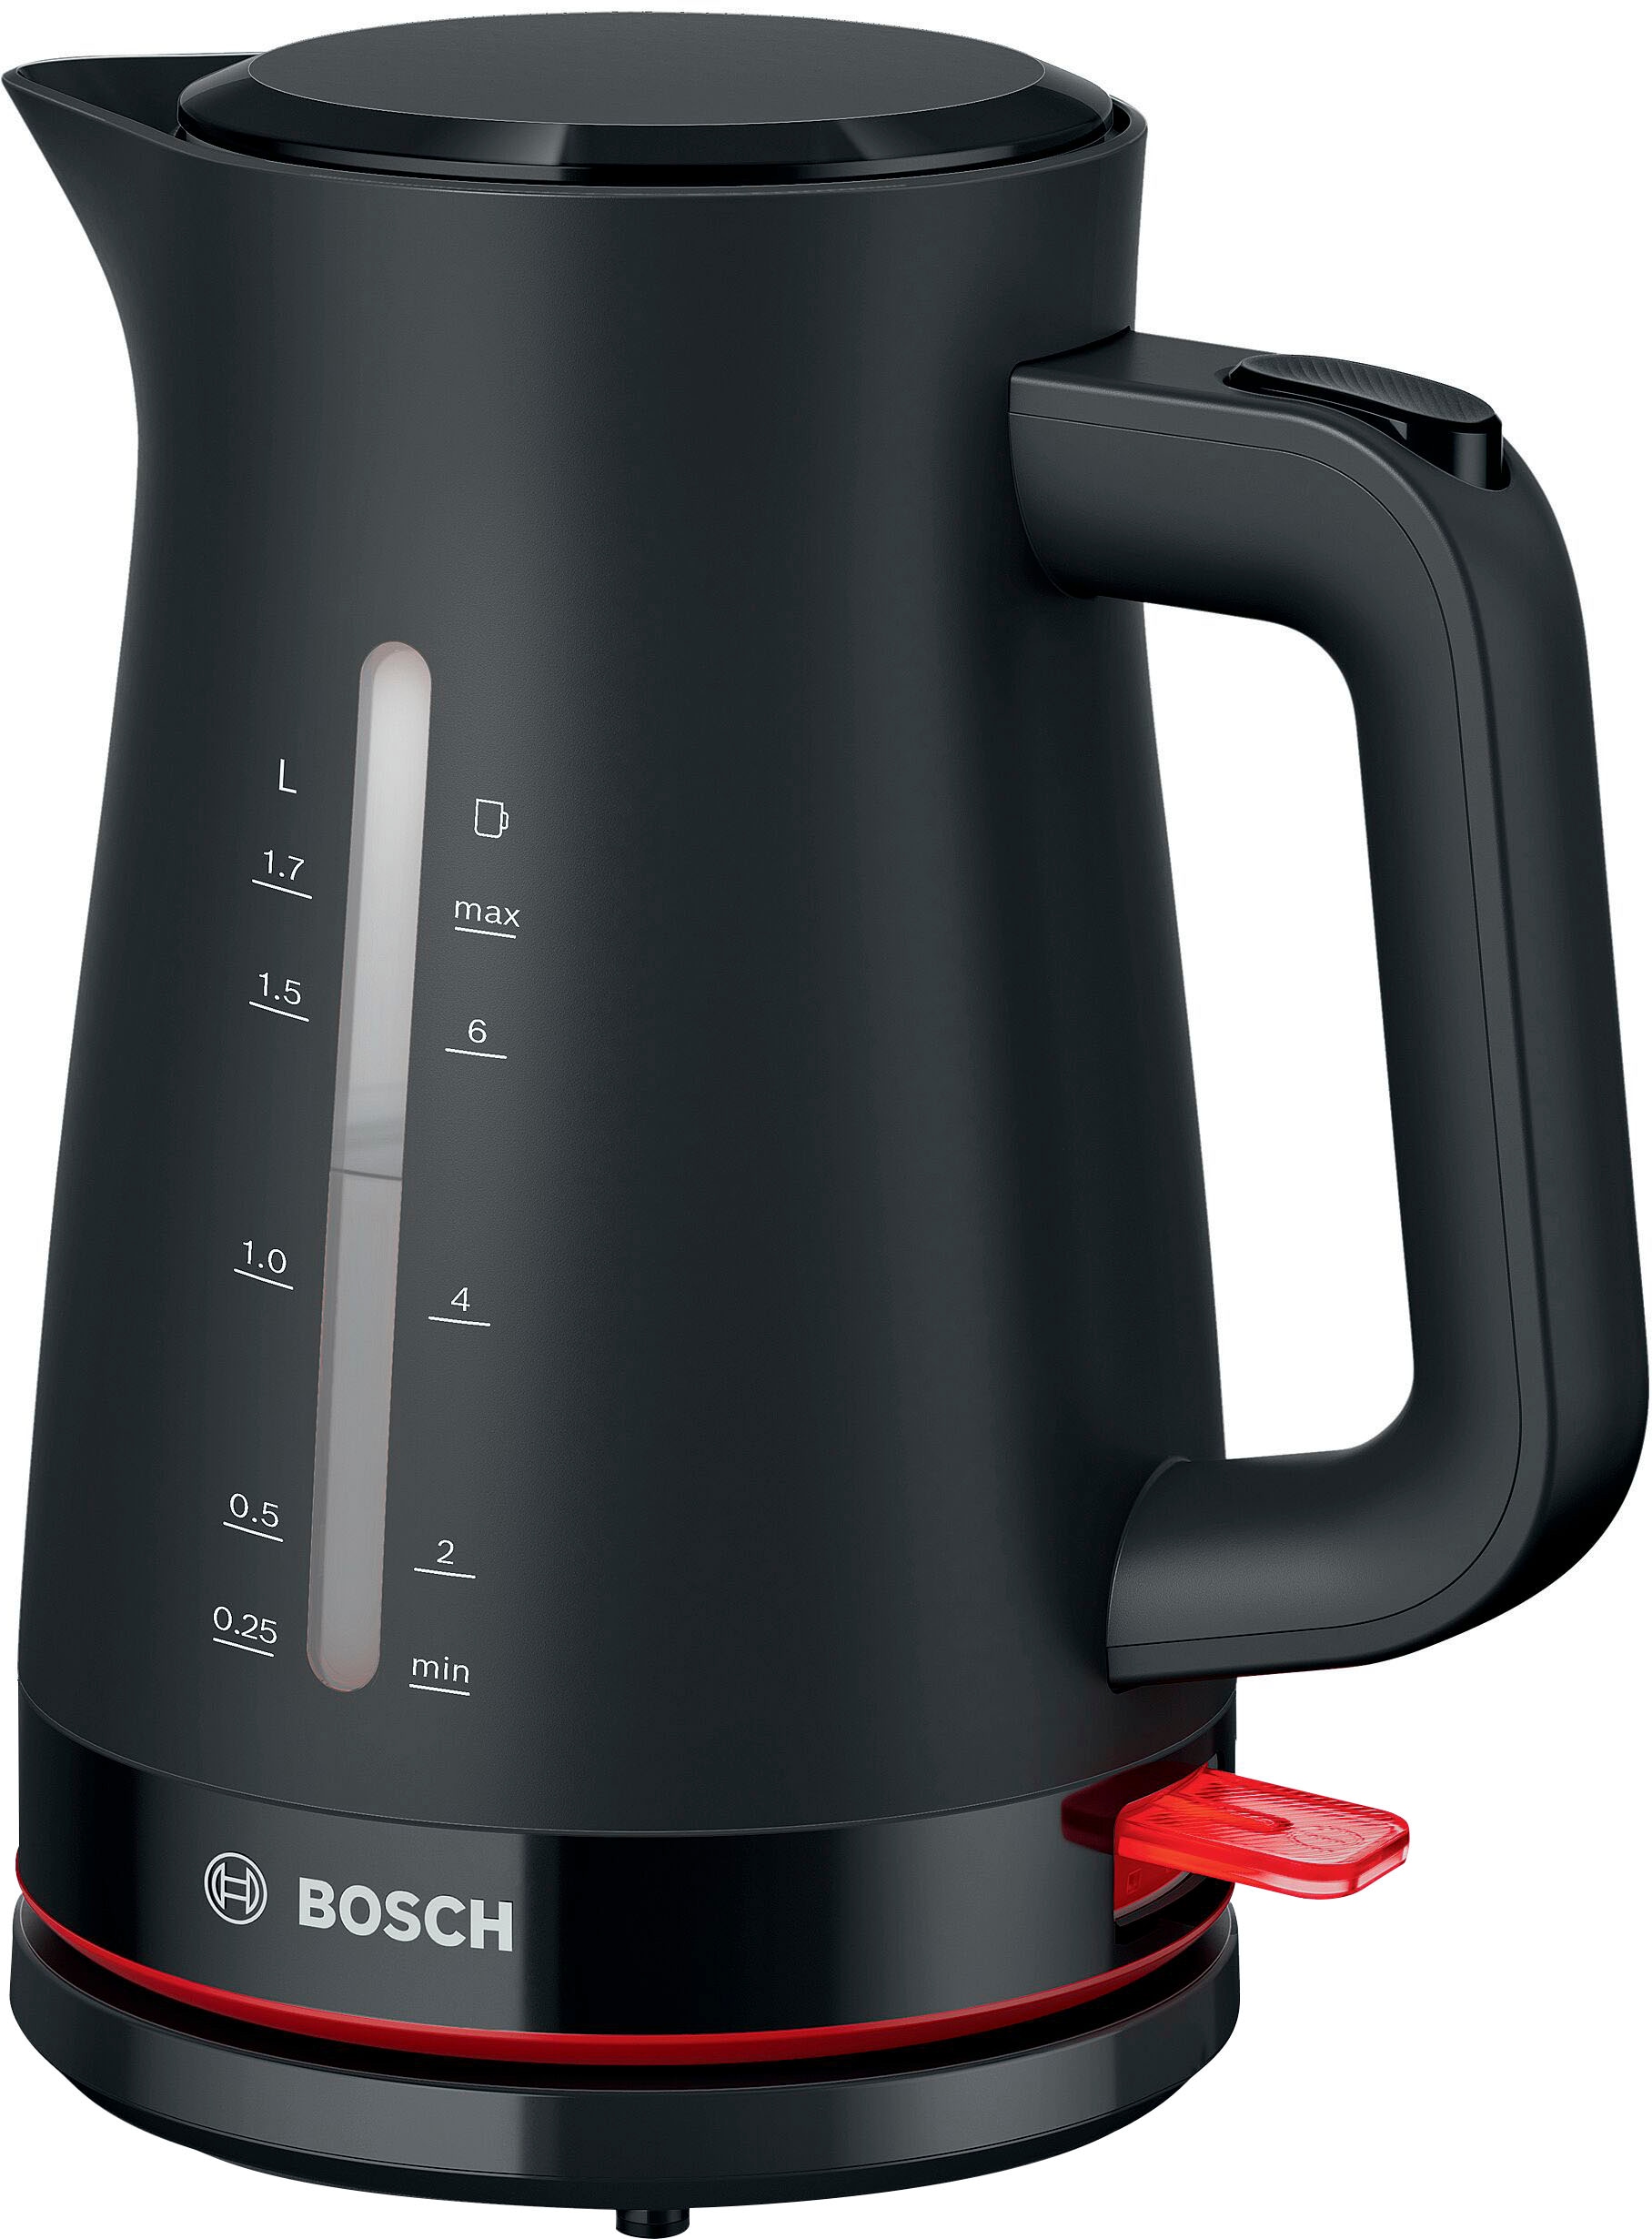 Wasserkocher Bosch ❤ jetzt